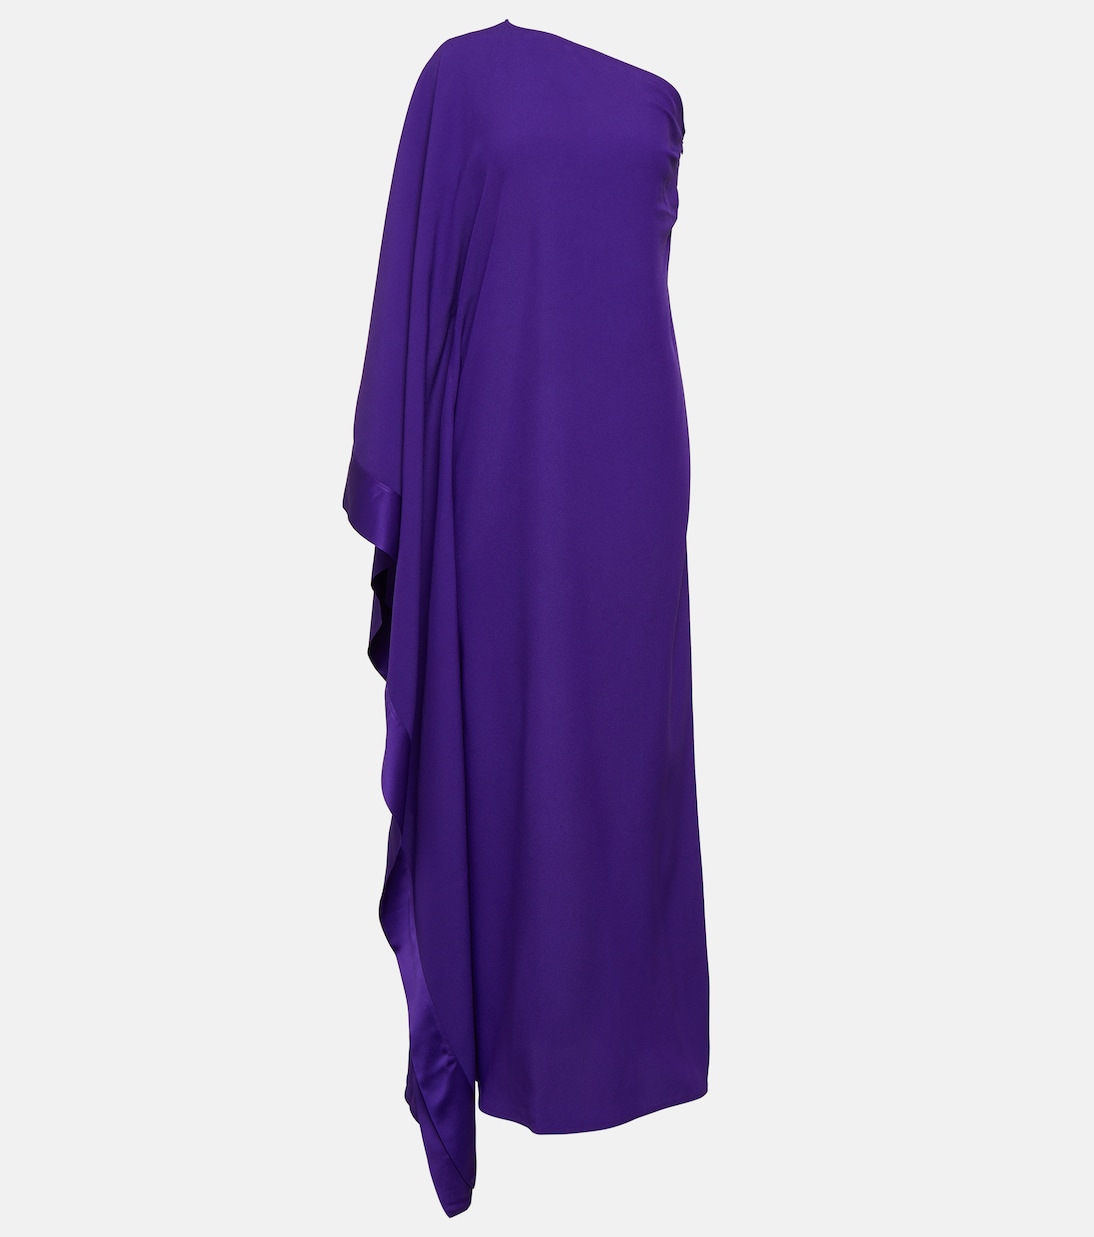 цена Креповое платье betsy на одно плечо Taller Marmo, фиолетовый